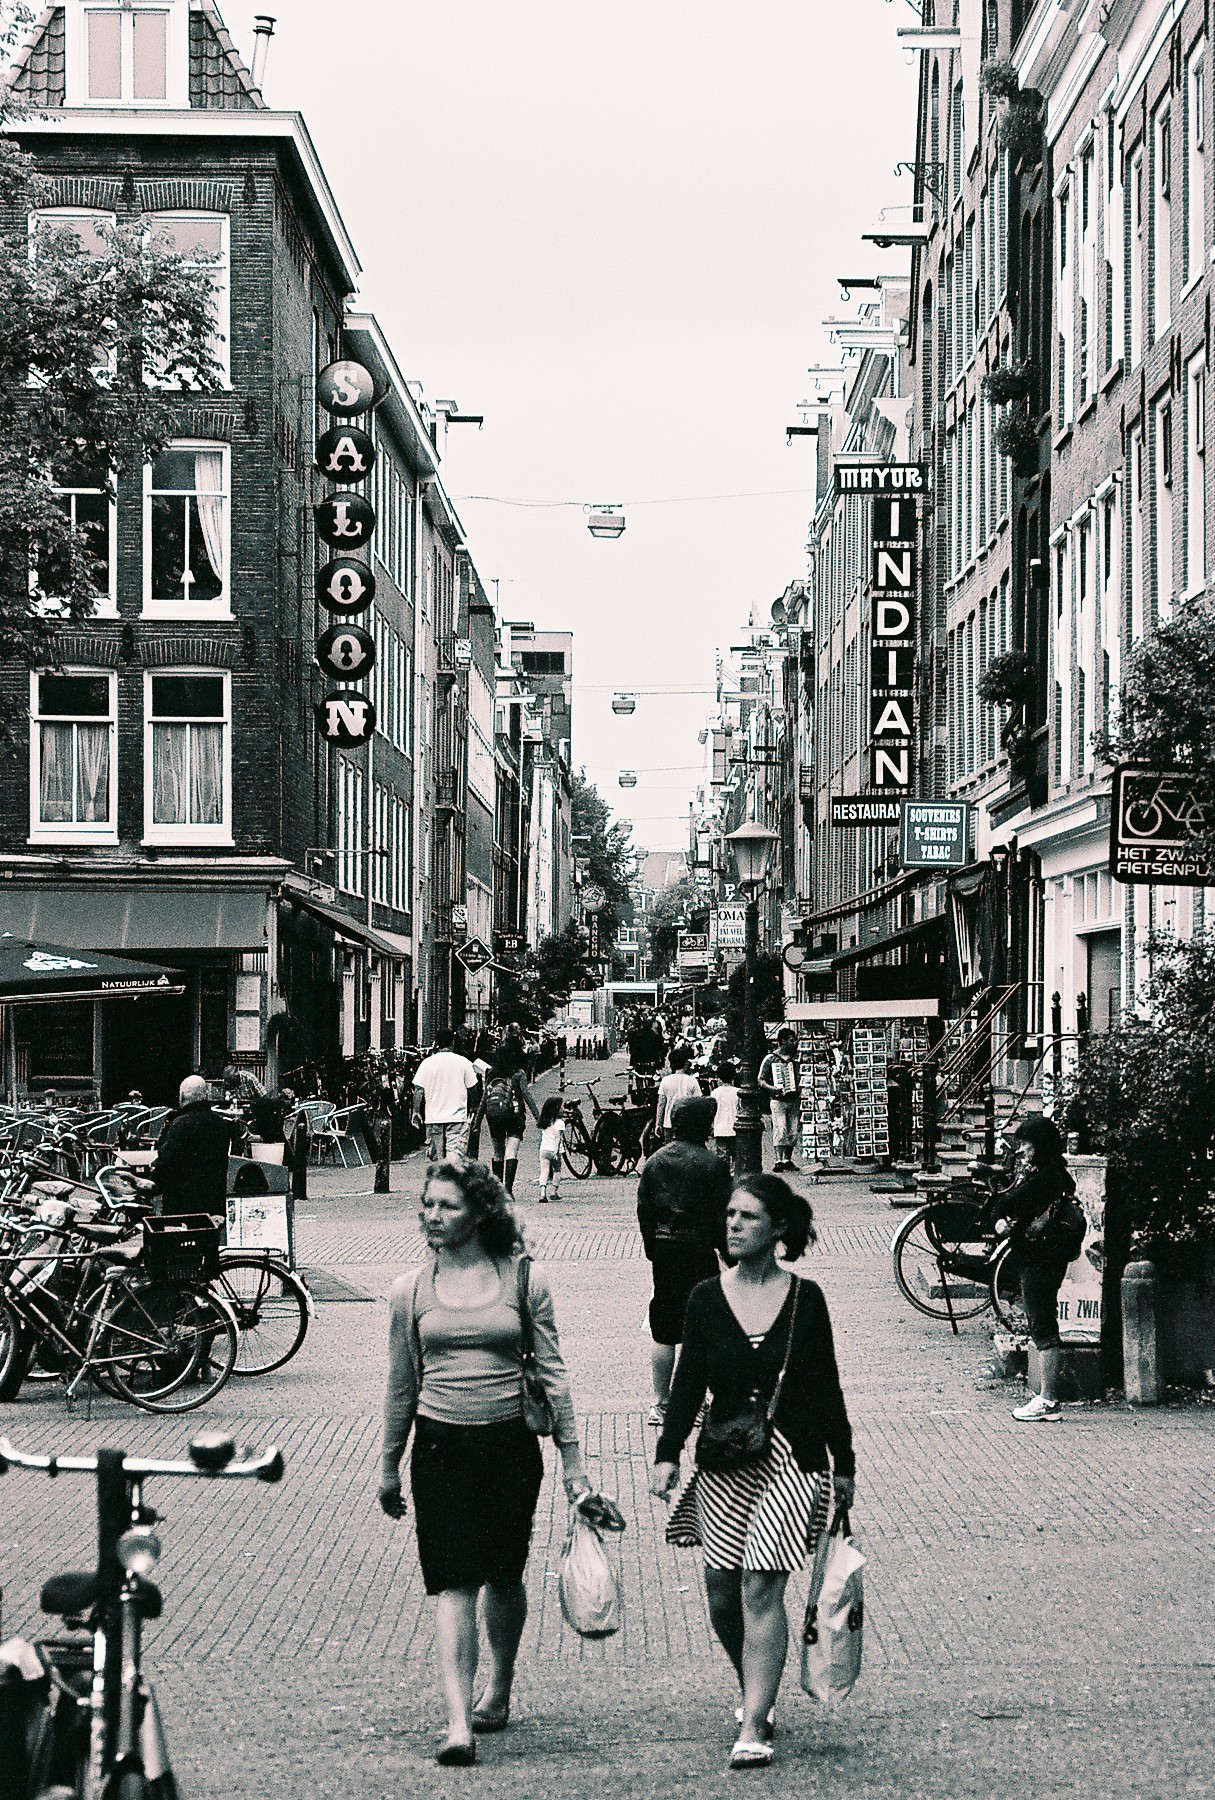 Shopping in Amsterdam